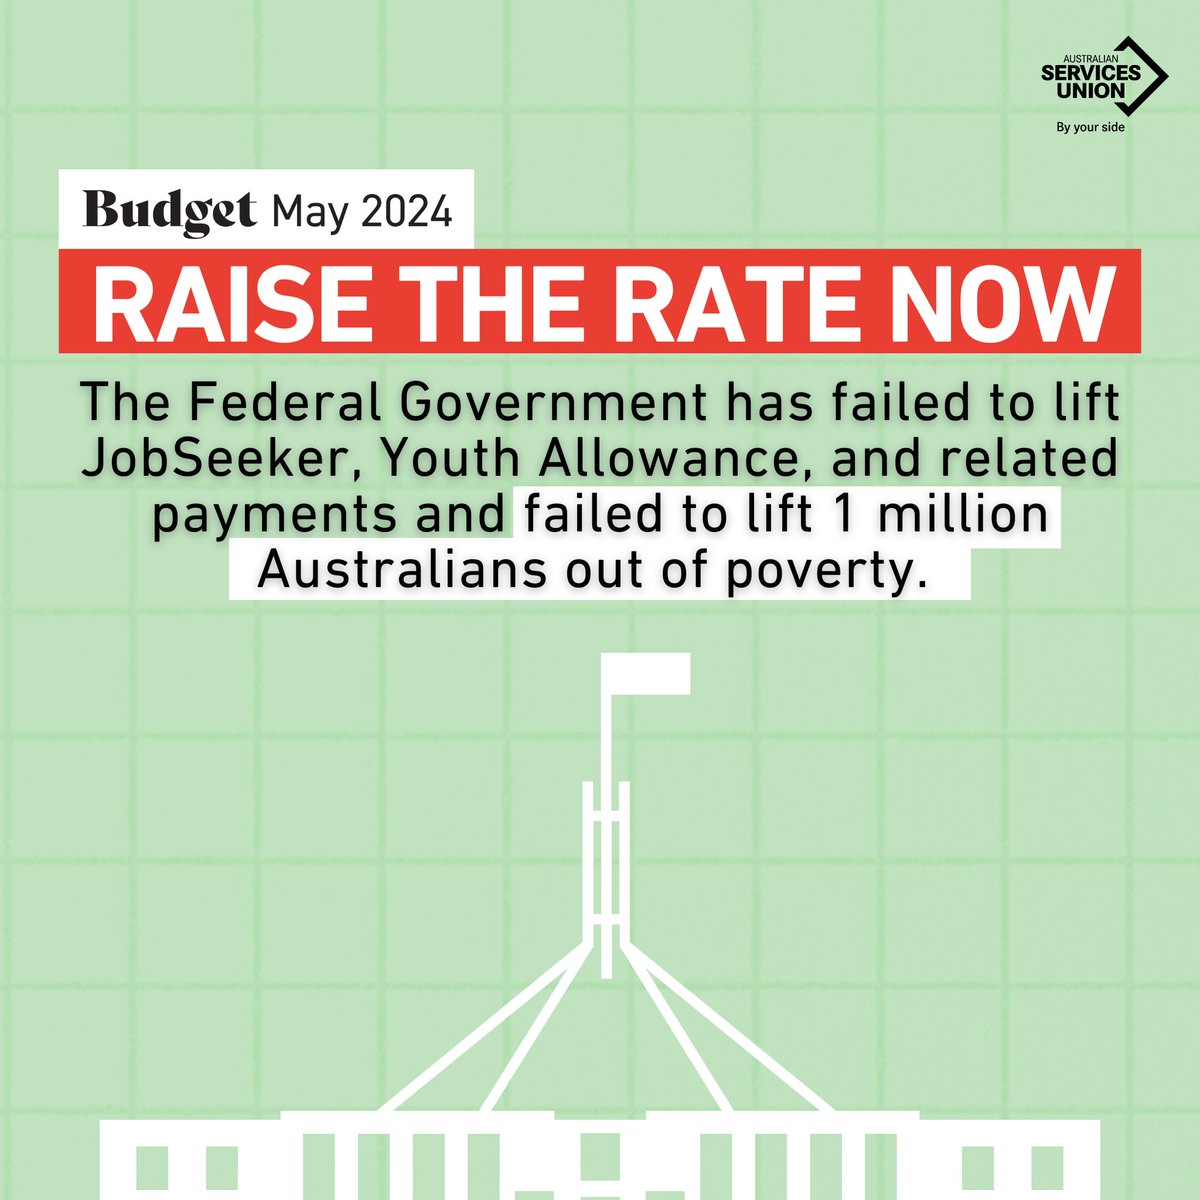 Tonight, the Government has failed to #RaiseTheRate for 1 million Australians.